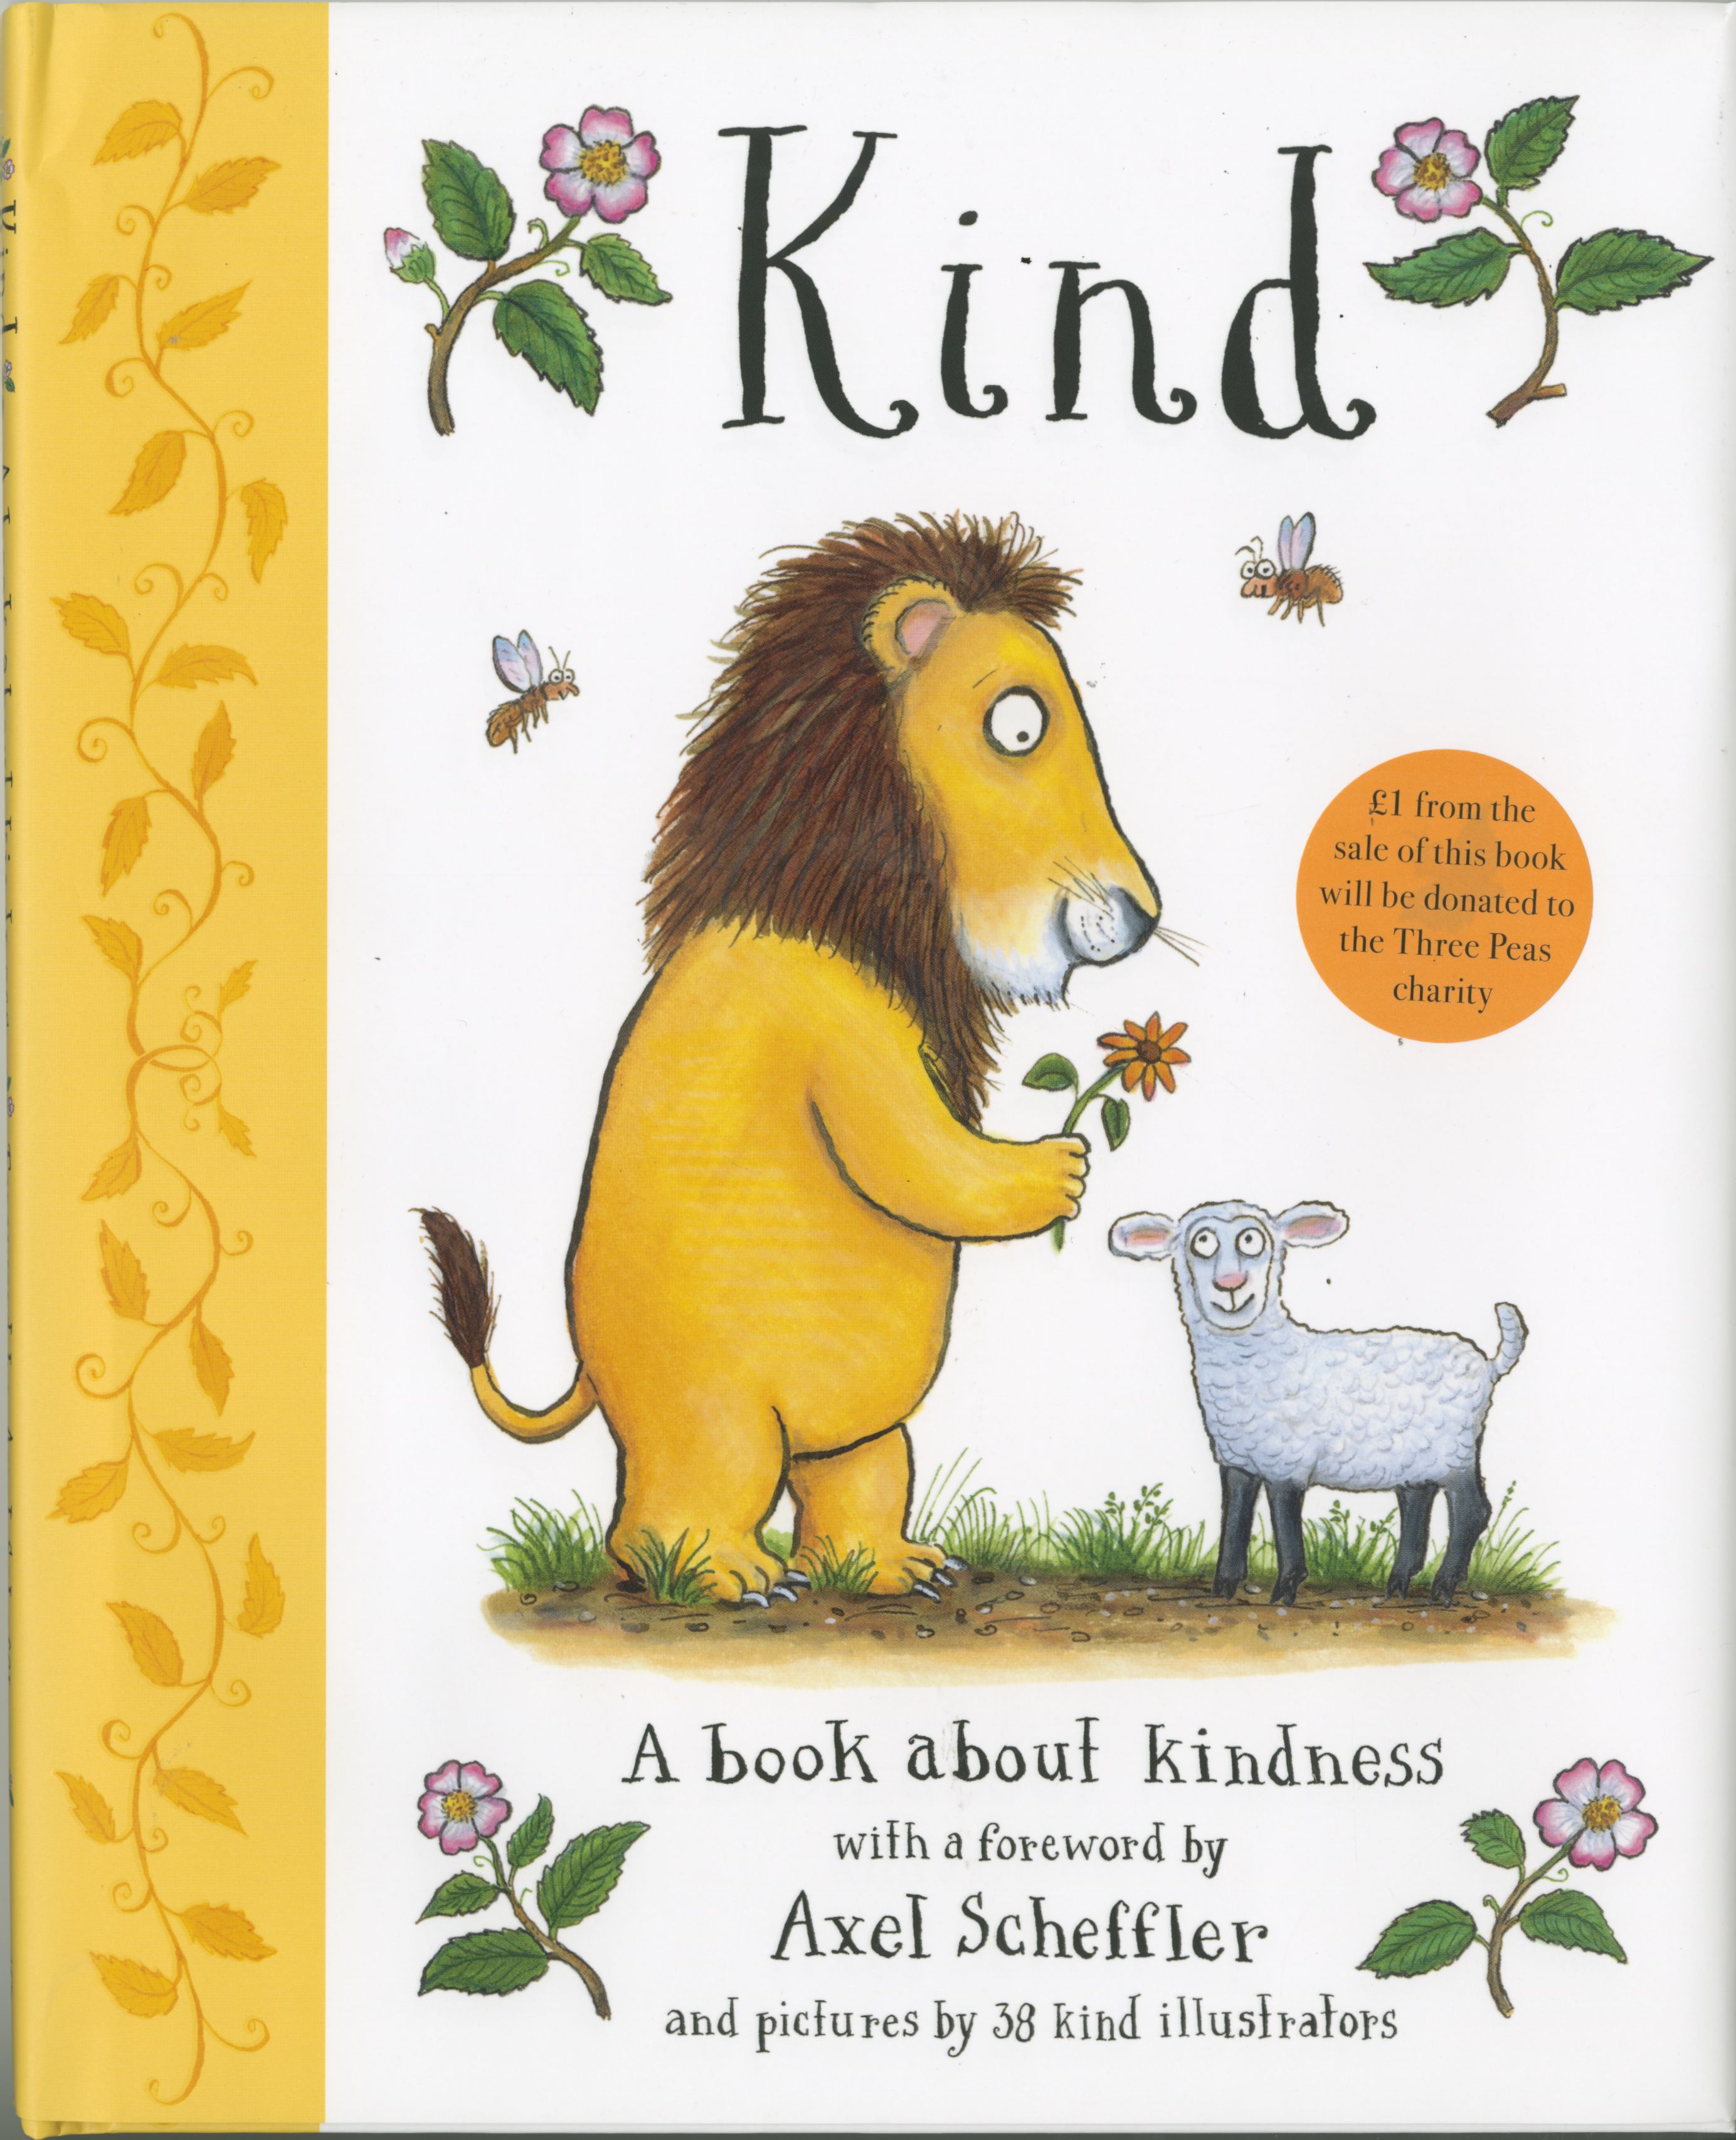 Illustrators support 'Kind' to help Three Peas charity